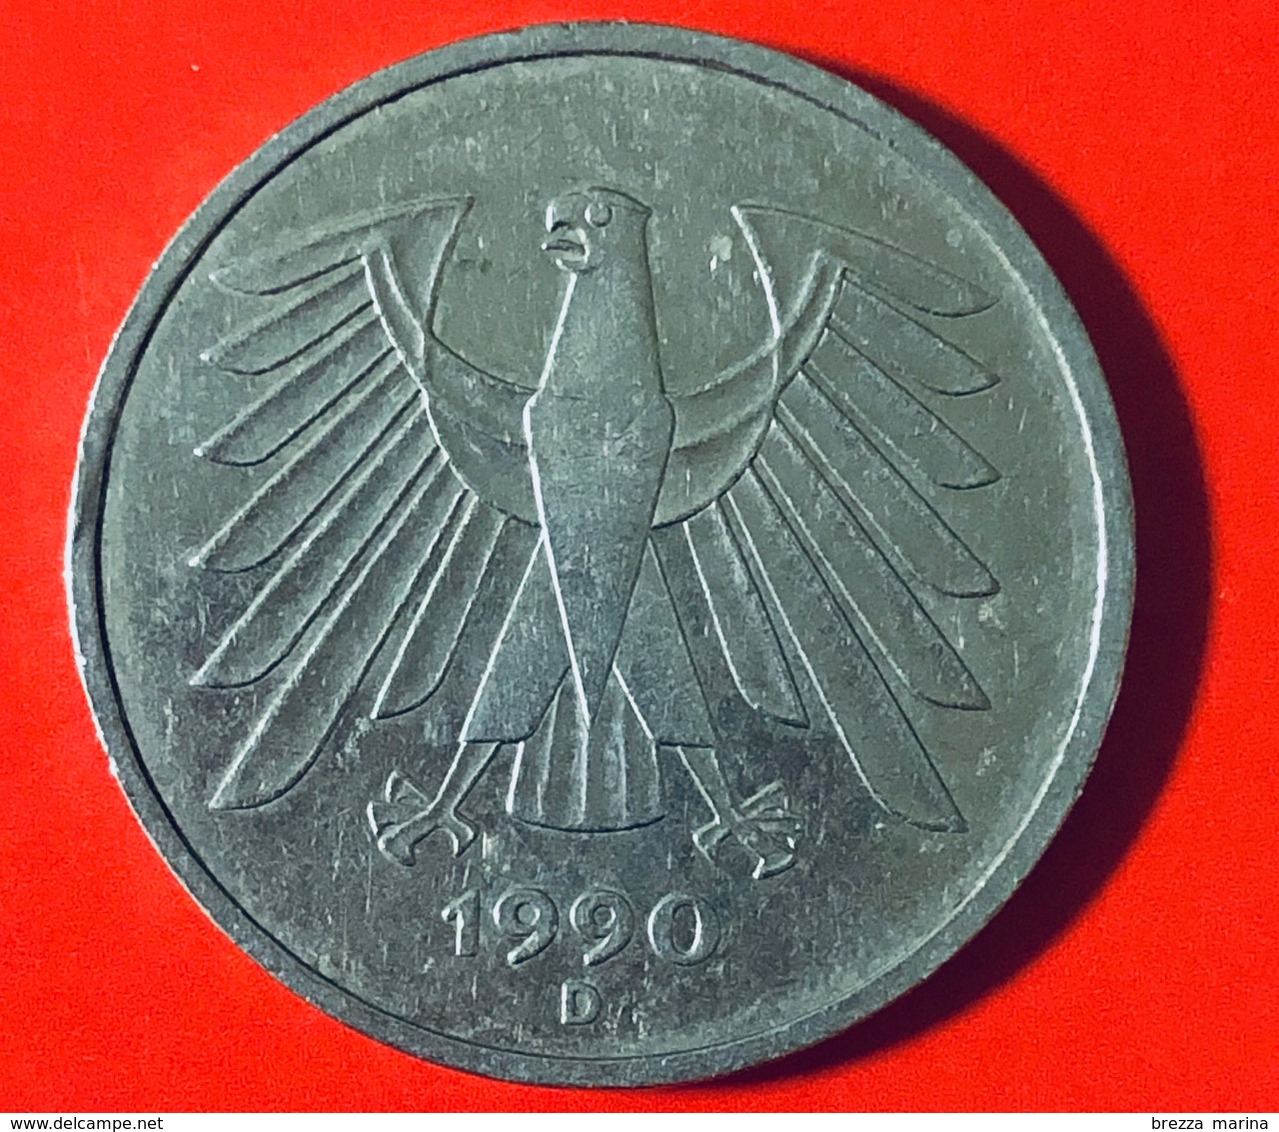 GERMANIA - 1990 - Moneta - Aquila - 5 Marchi  - 5 DM - 5 Mark